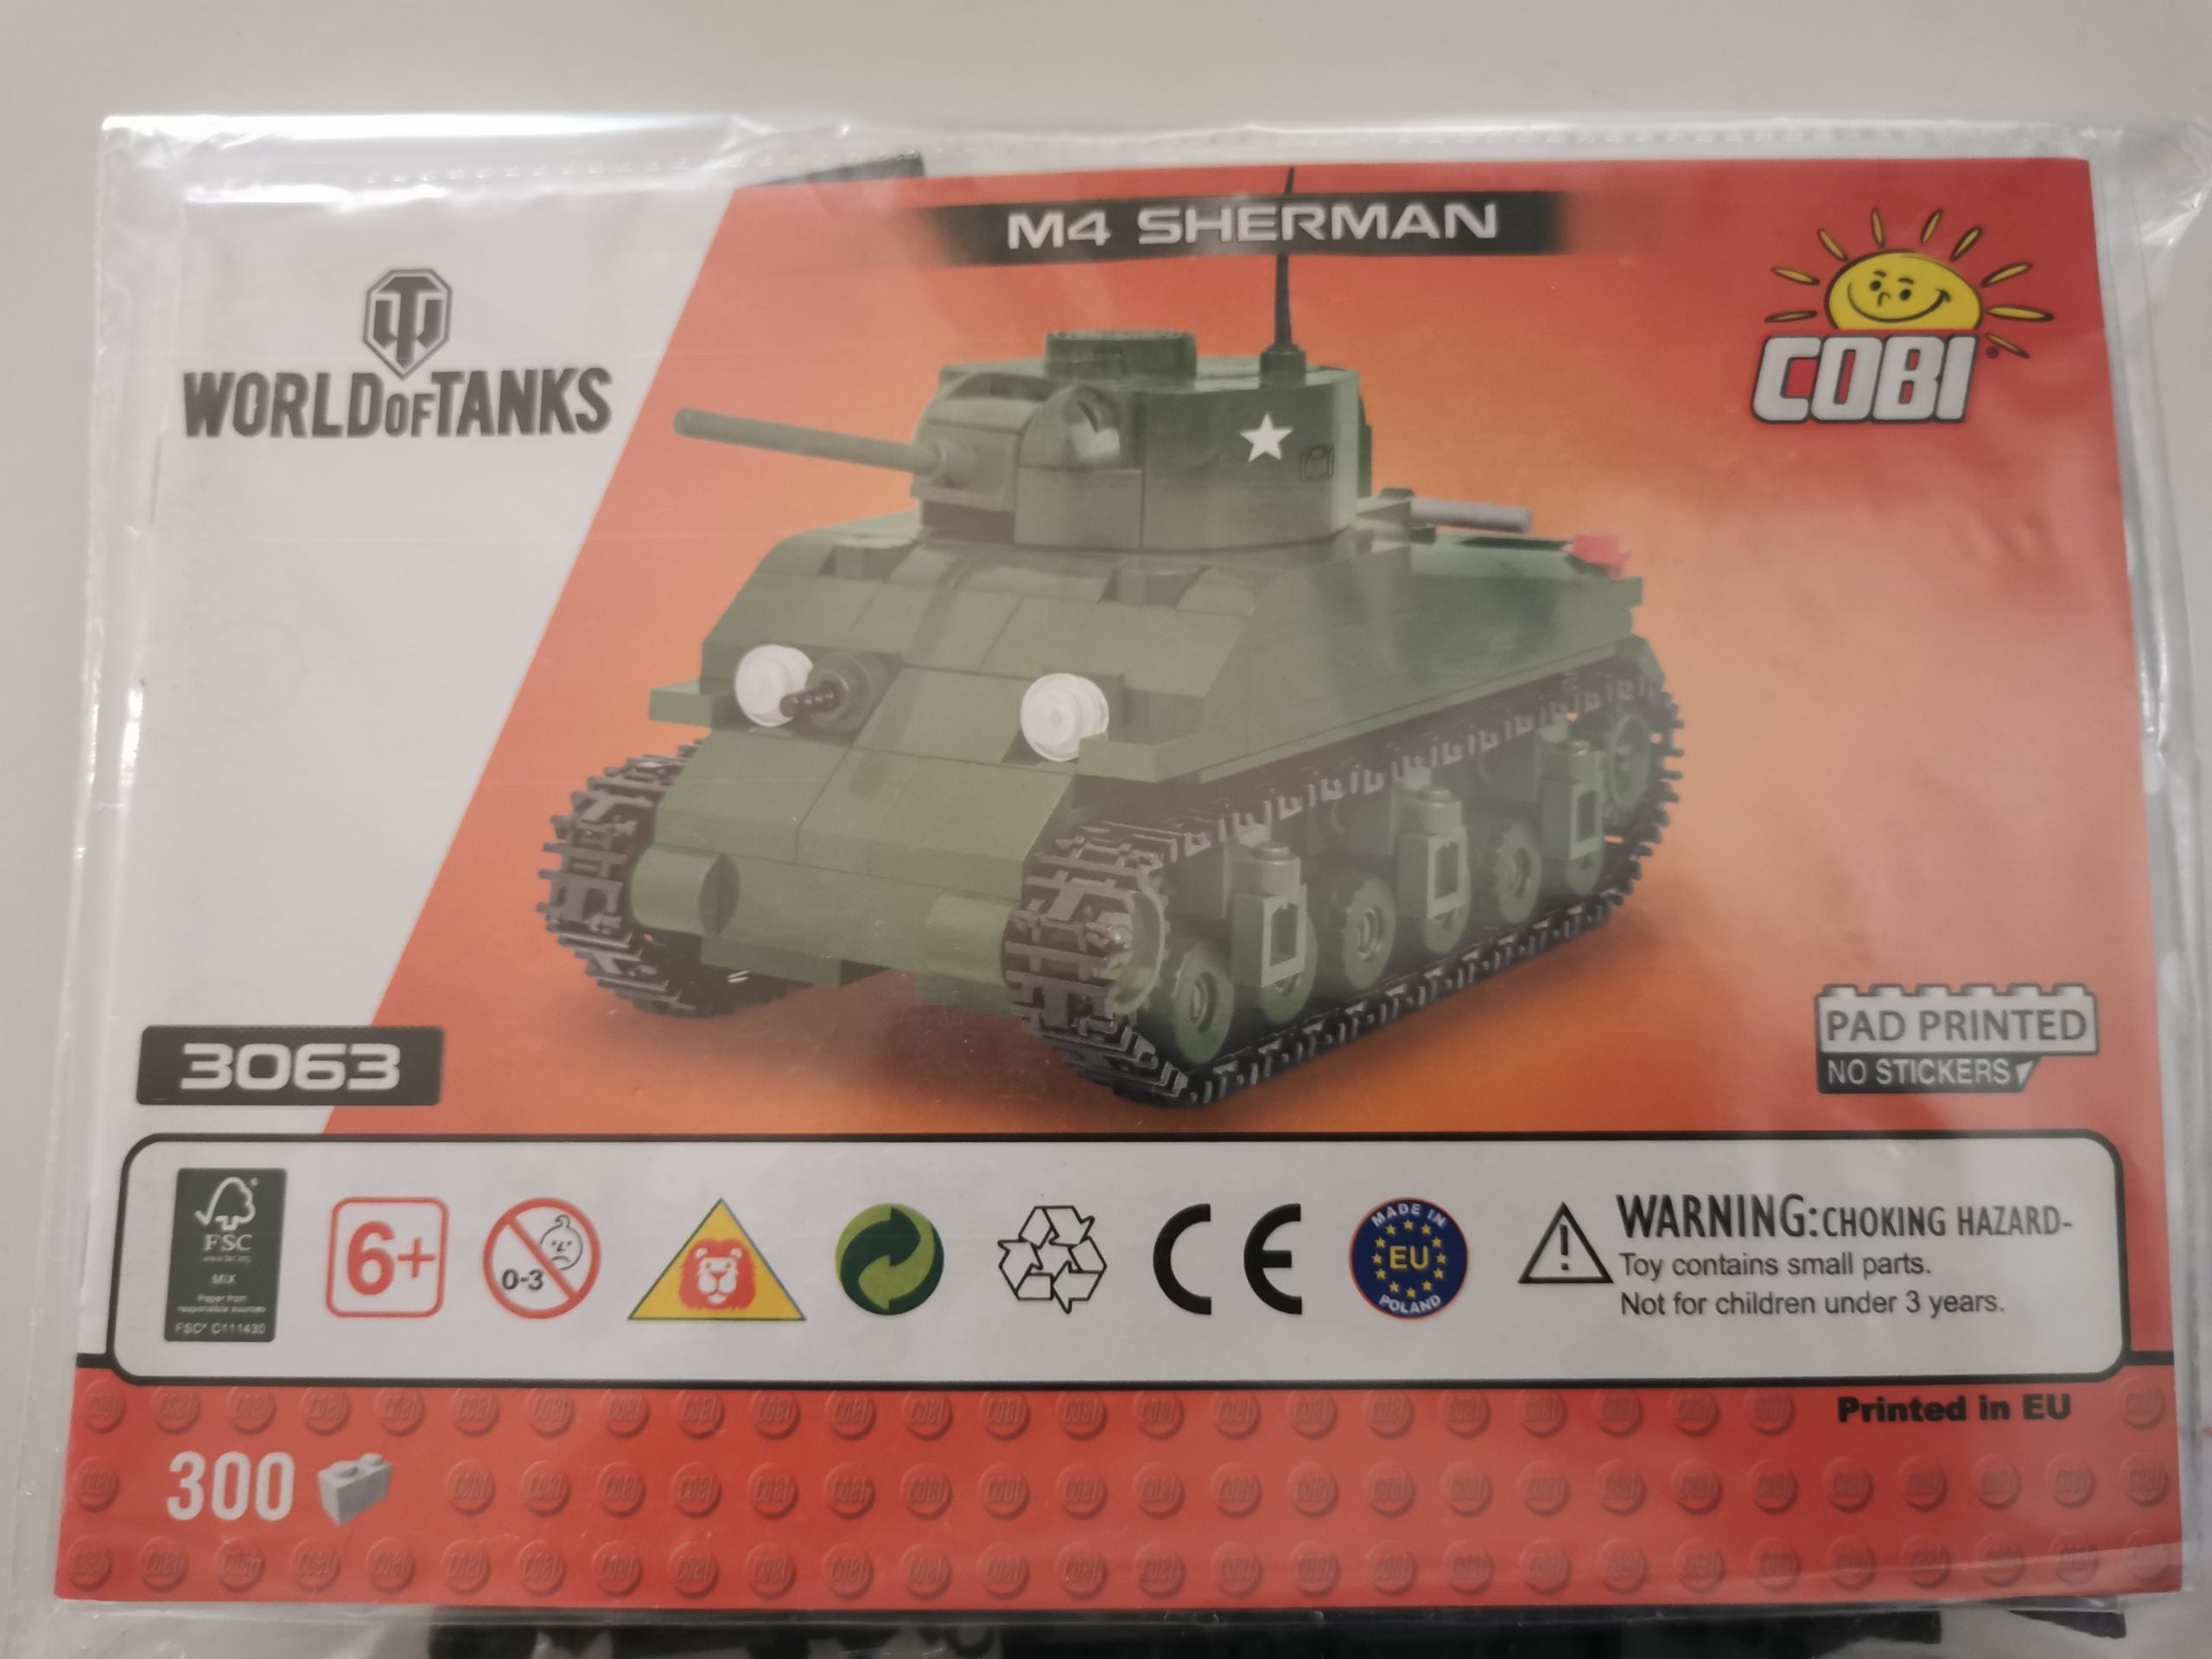 Cobi 3063 M4 Sherman (1:48) (World of Tanks) used